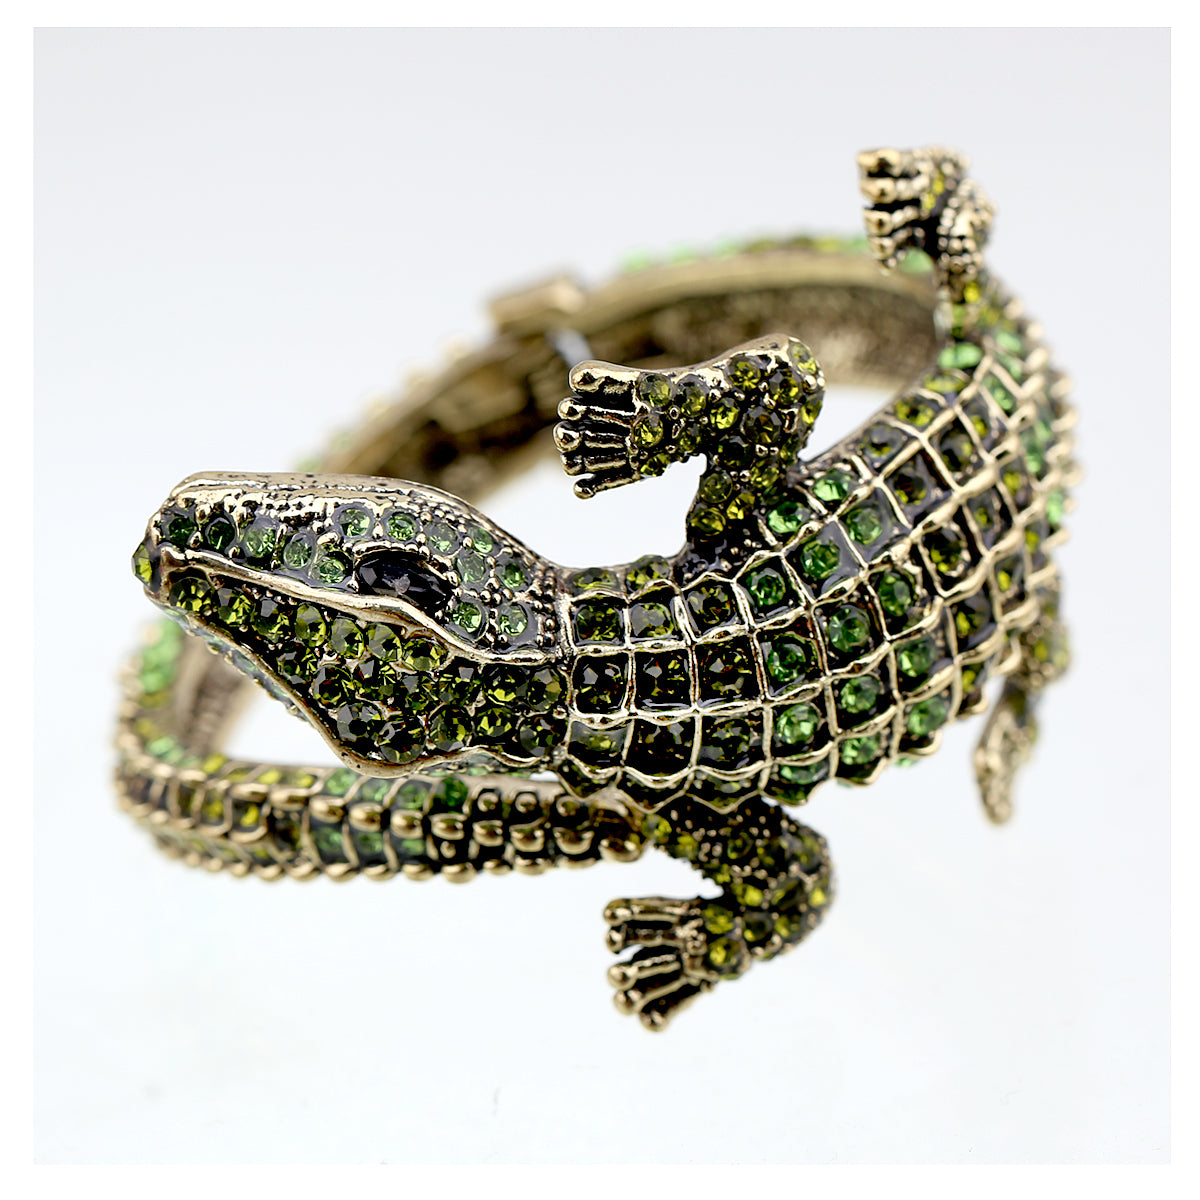 "The Green Beauty" - Realistic Crocodile cuff Bracelet - Style's Bug